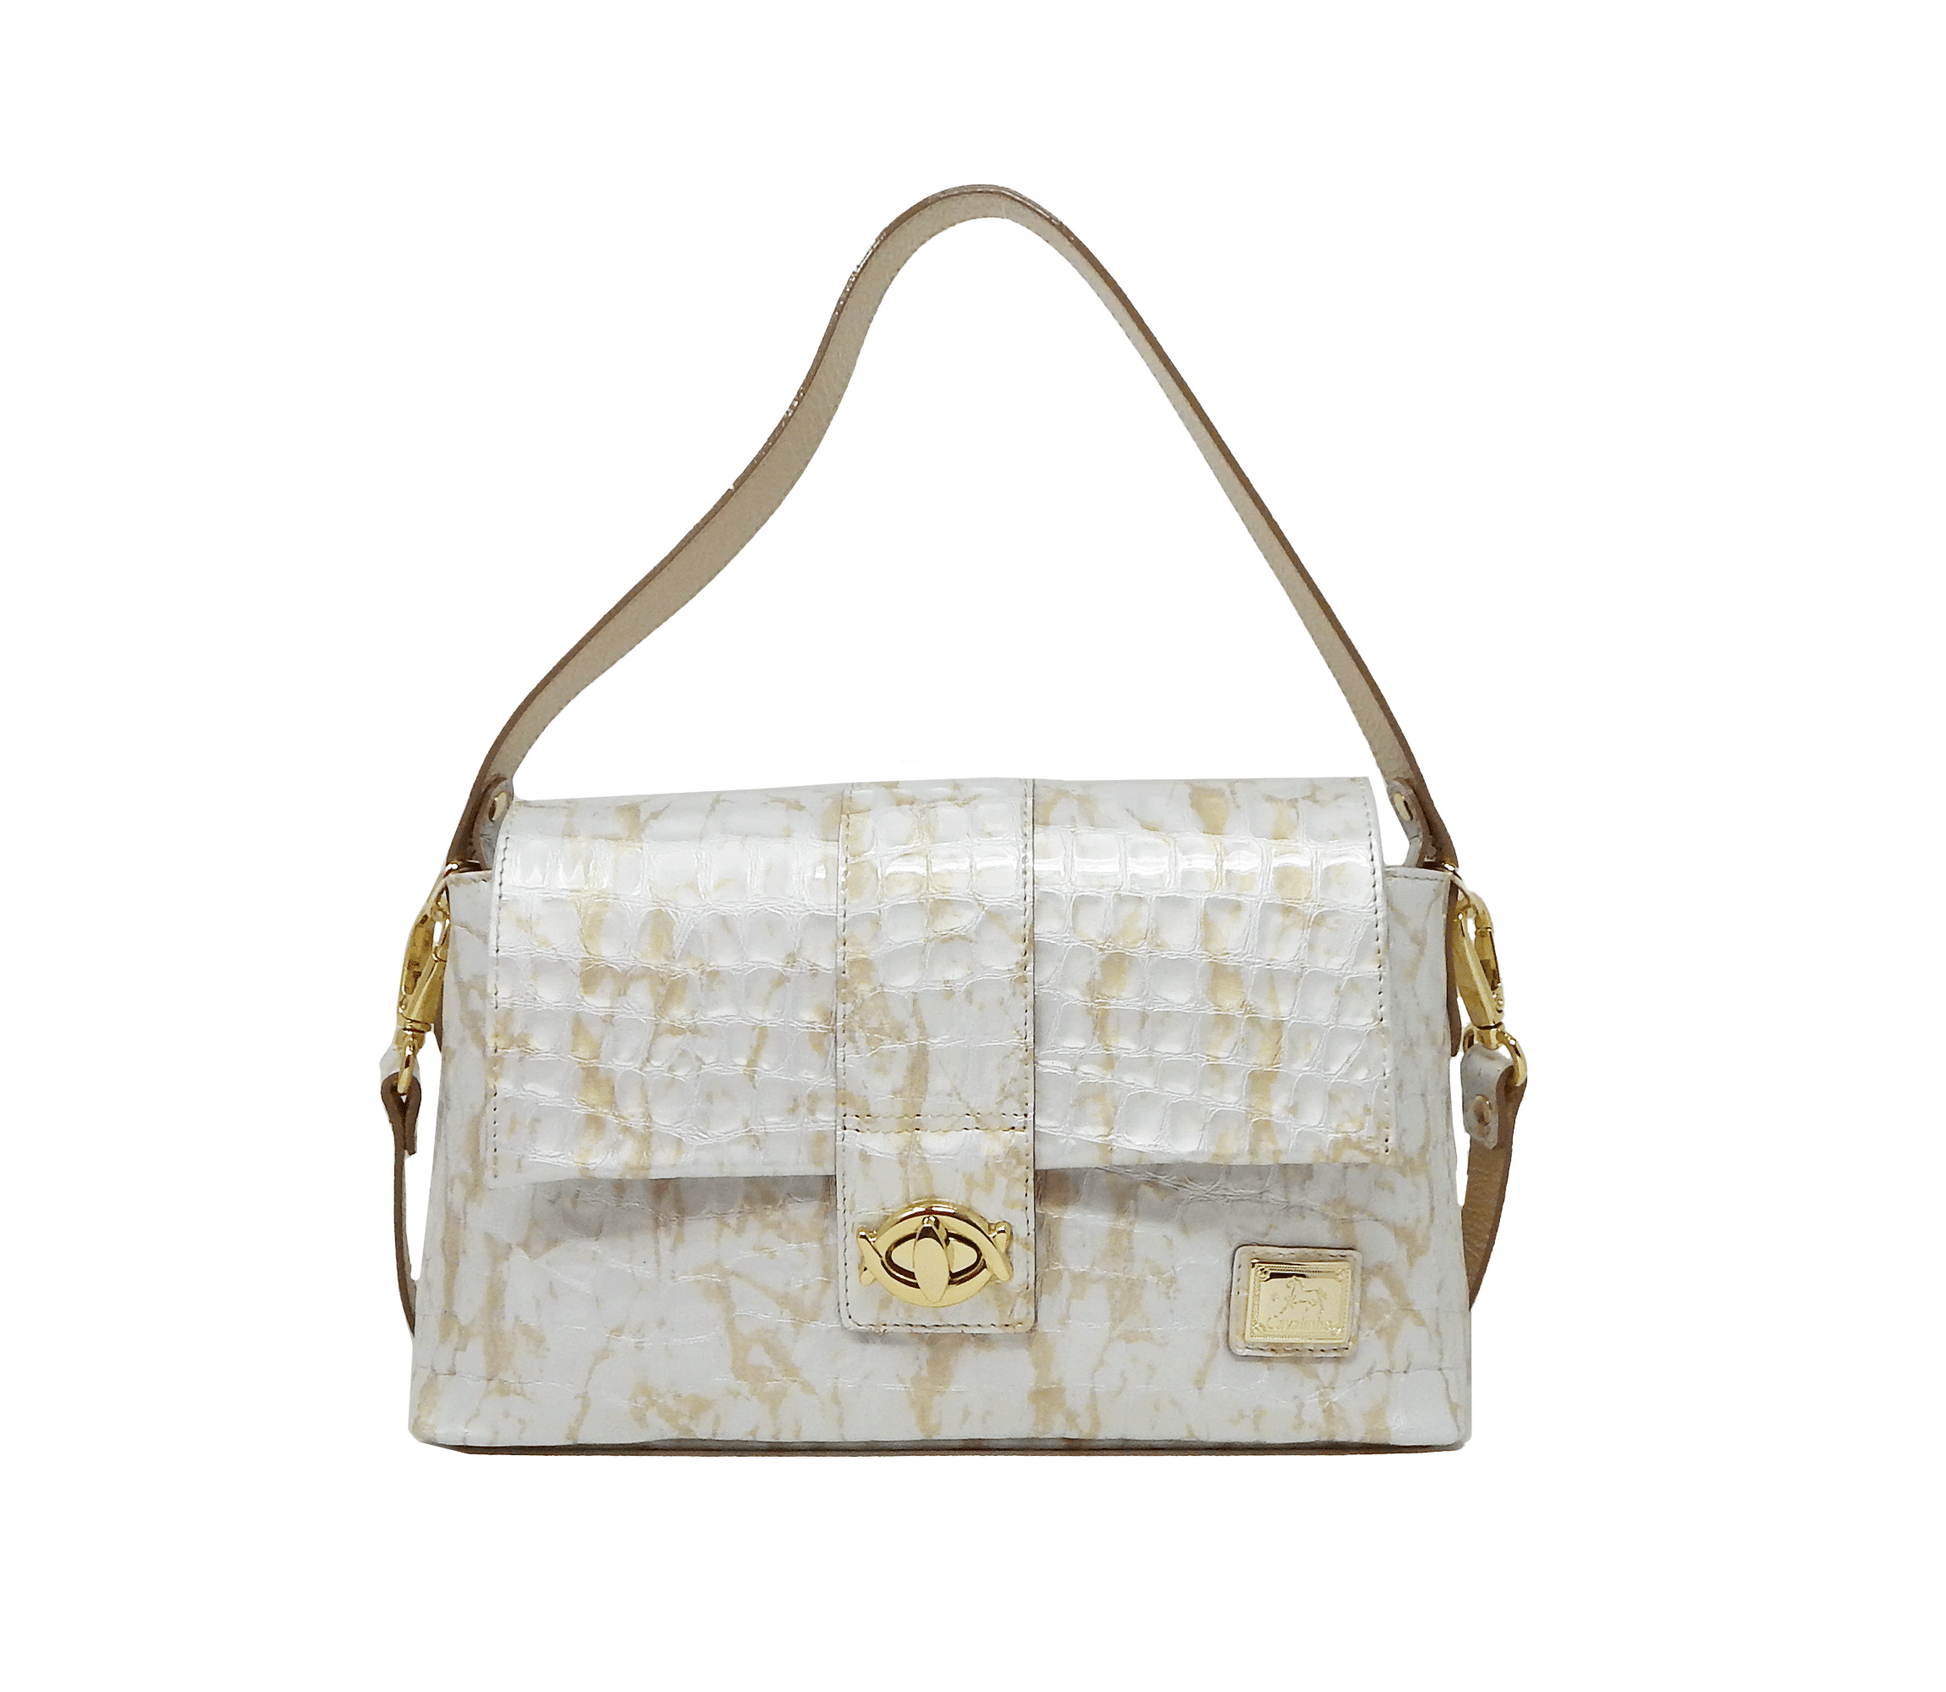 #color_ Beige White | Cavalinho Gallop Patent Leather Handbag - Beige White - 18170514.31_1